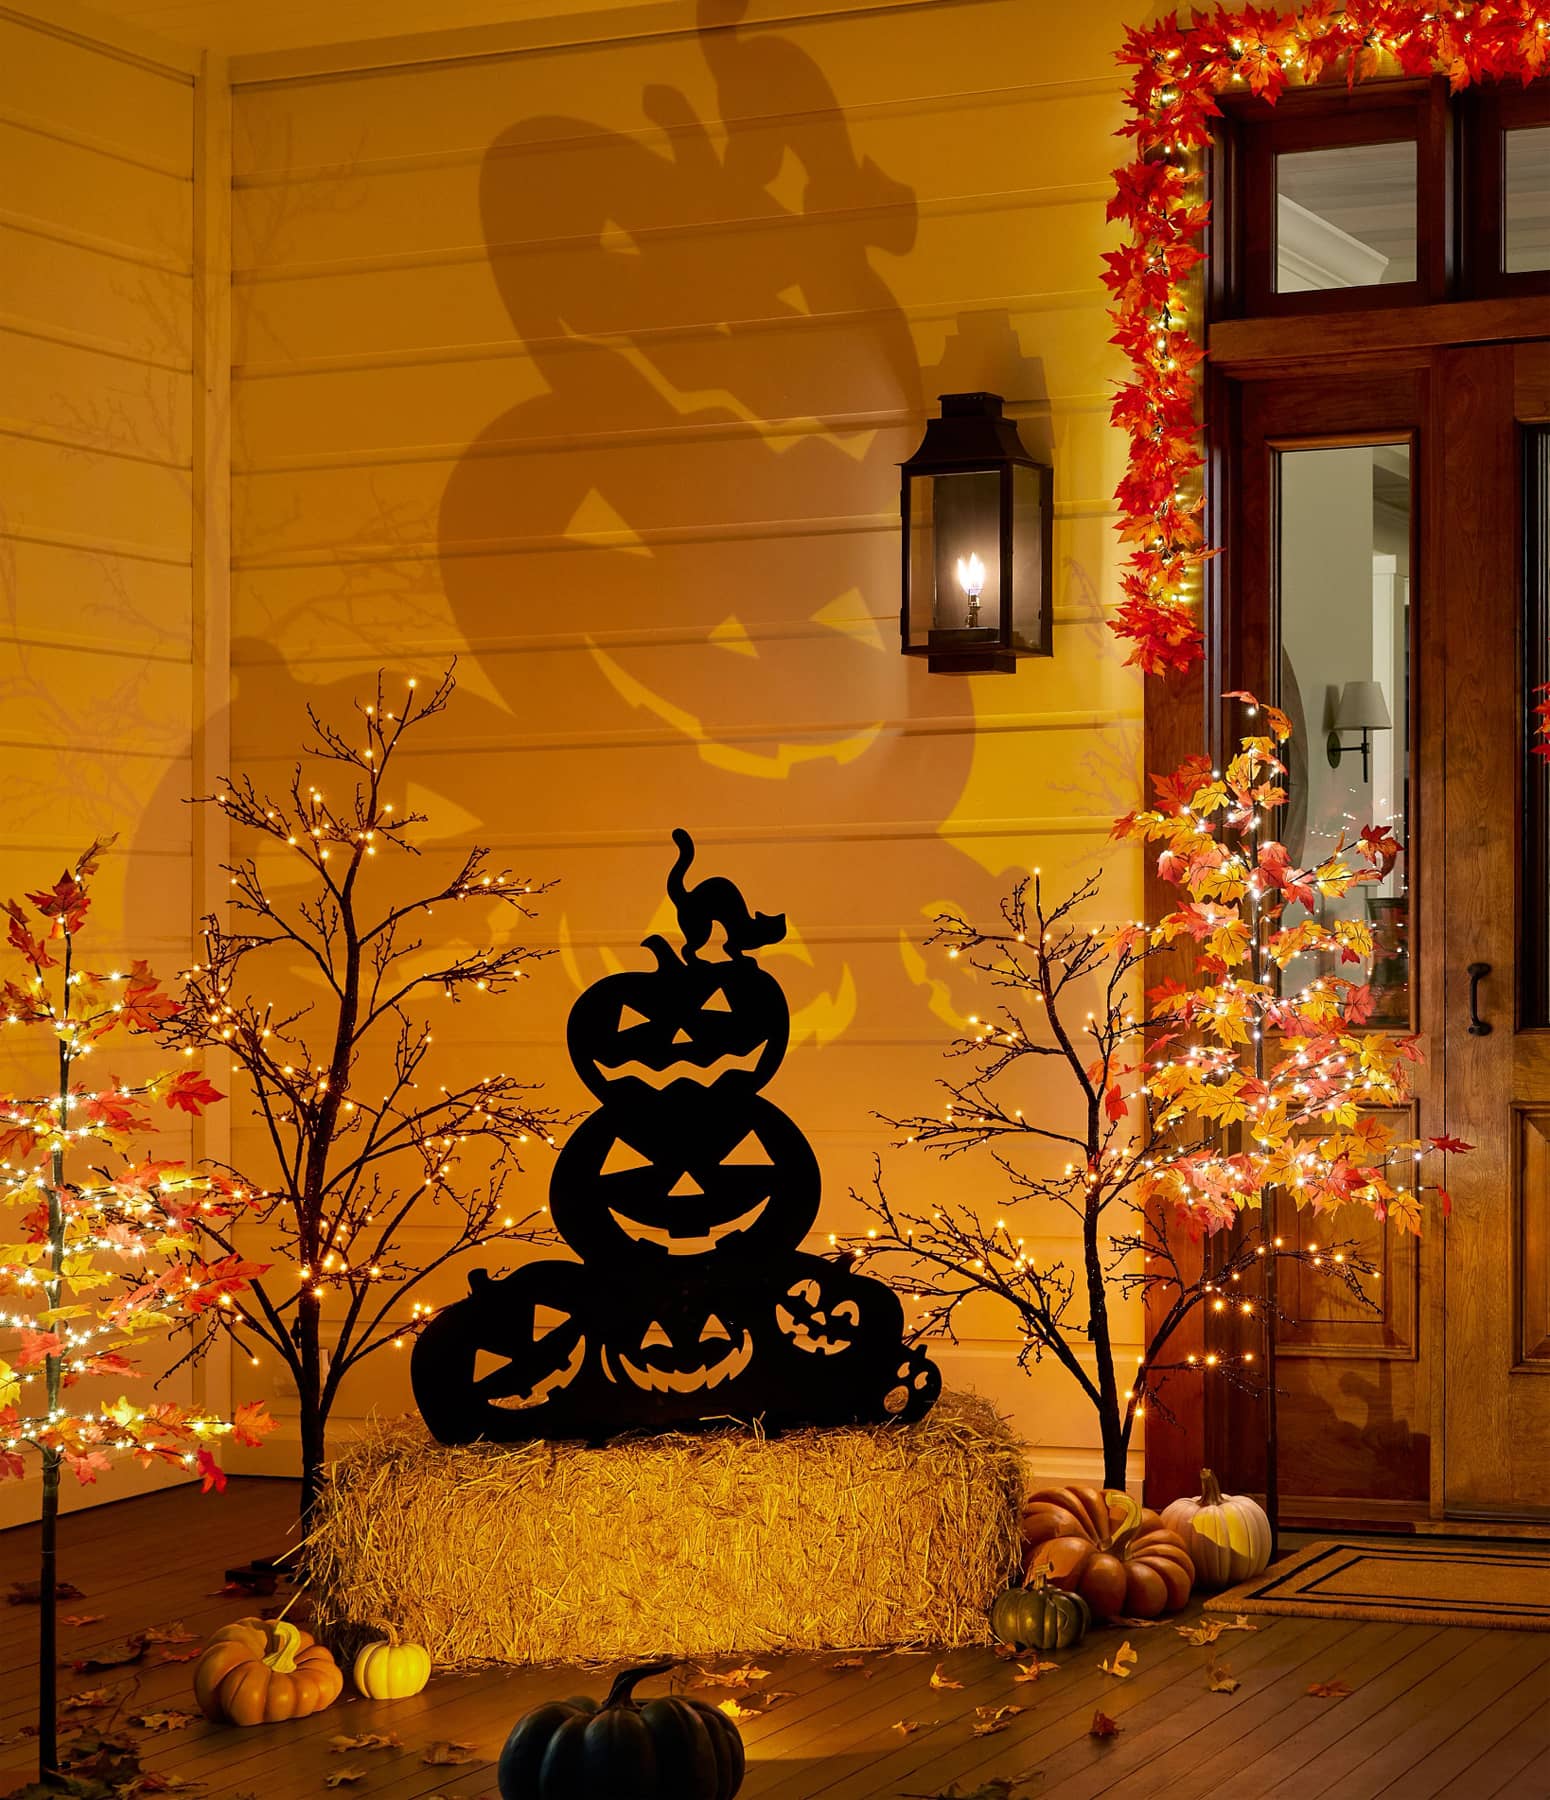 Halloween Jack-O'-Lanterns Silhouette w/ Orange LED Spotlight